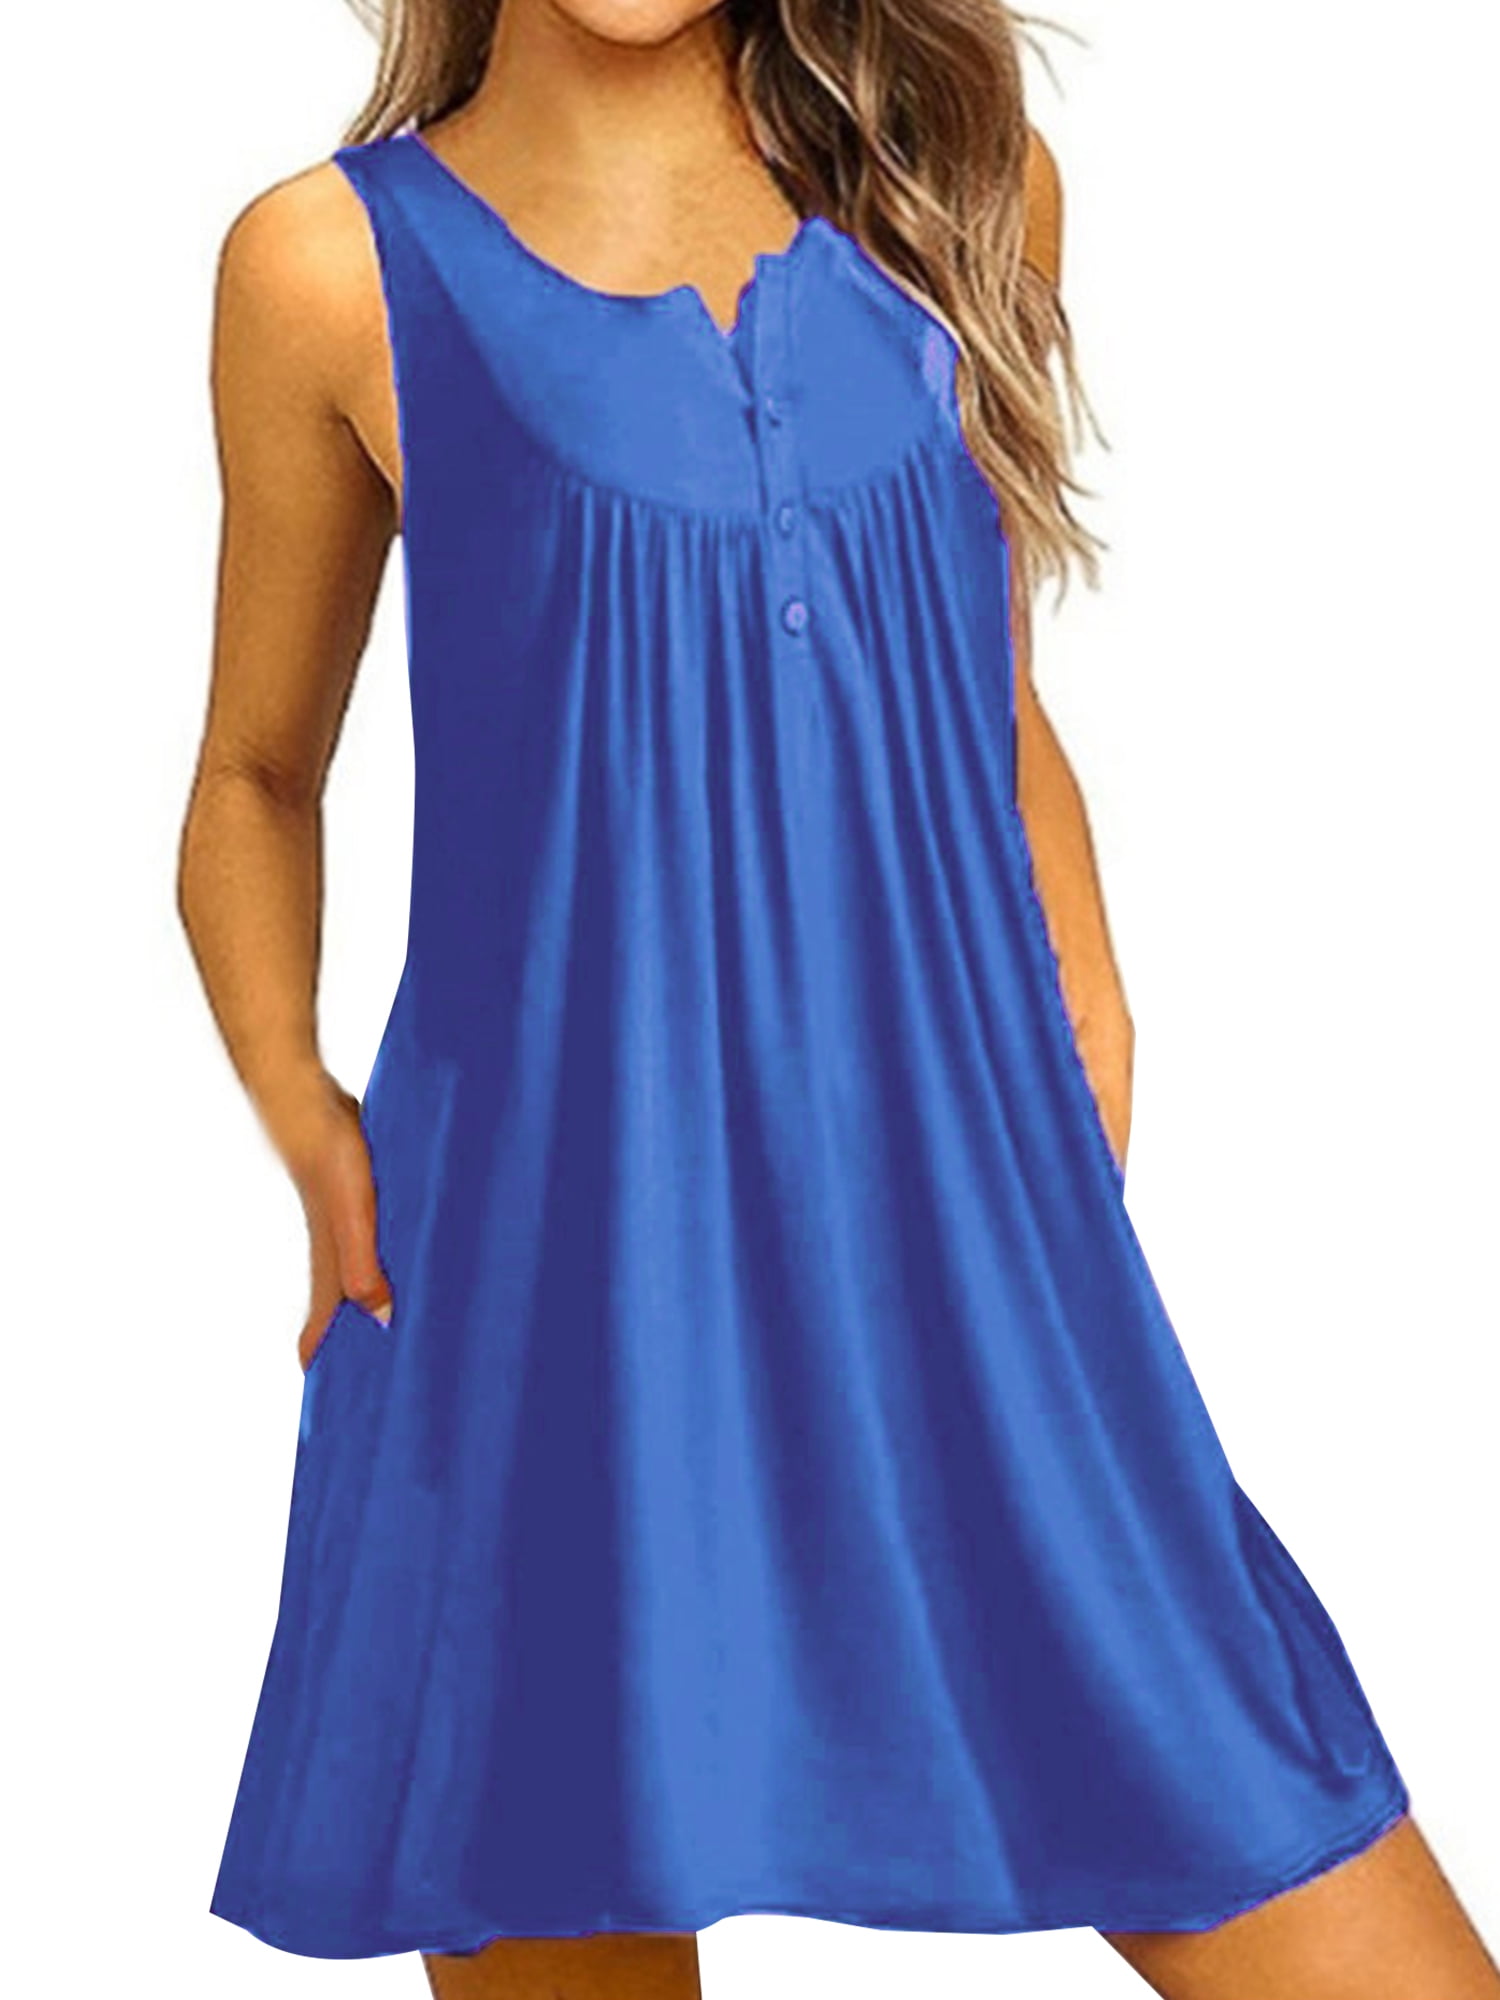 Sexy Dance Nightshirt For Women Sleeveless Sleepwear Nightgown V Neck 